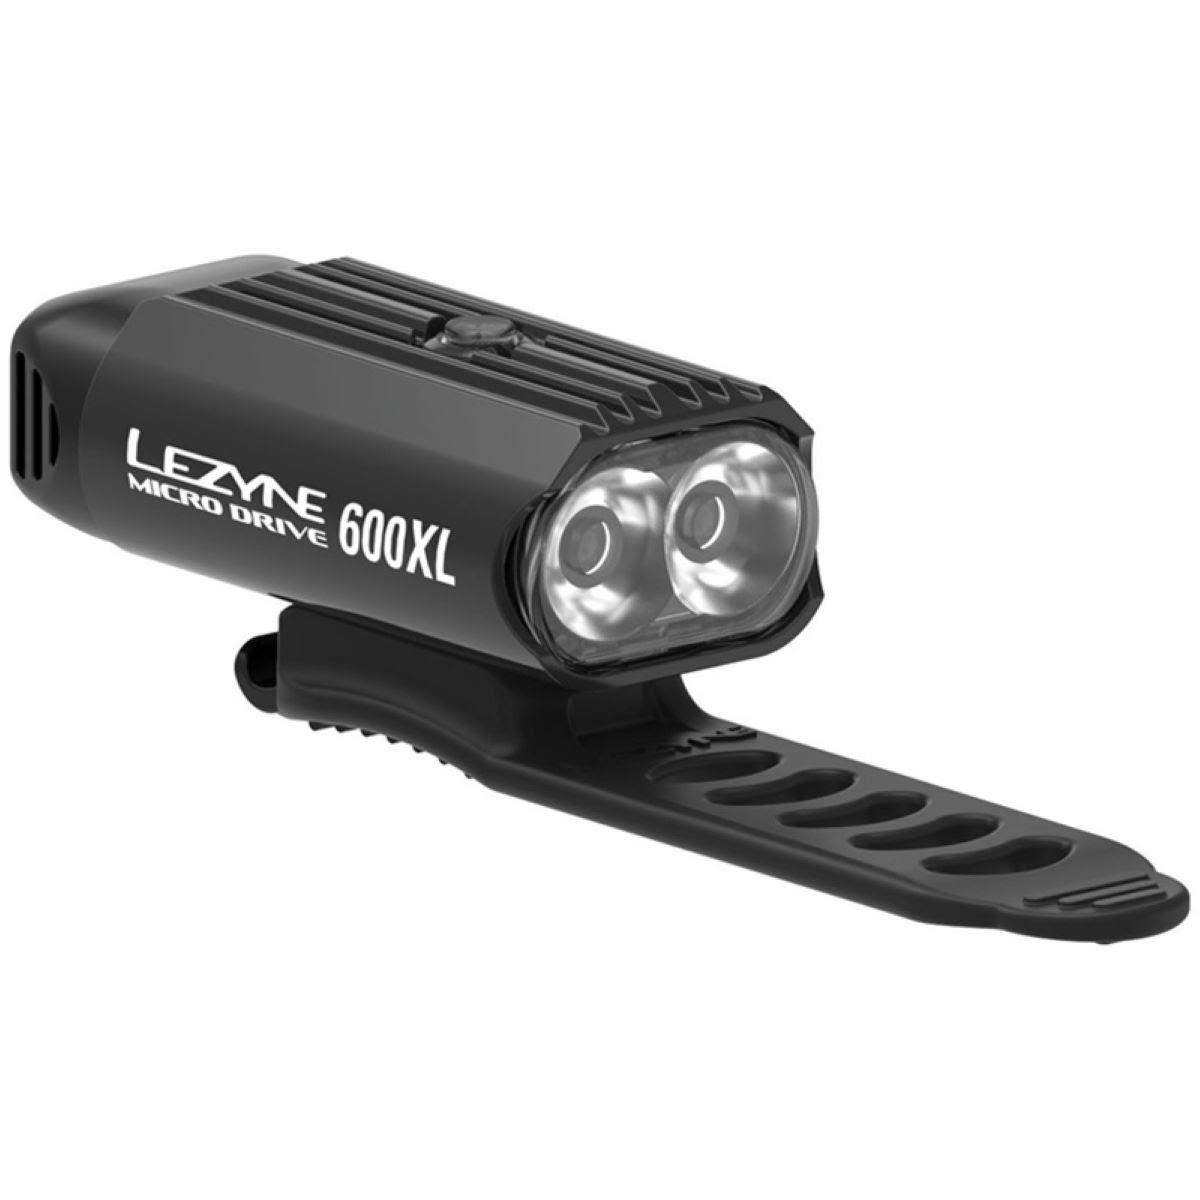 Lezyne Micro Drive 600XL Head Light